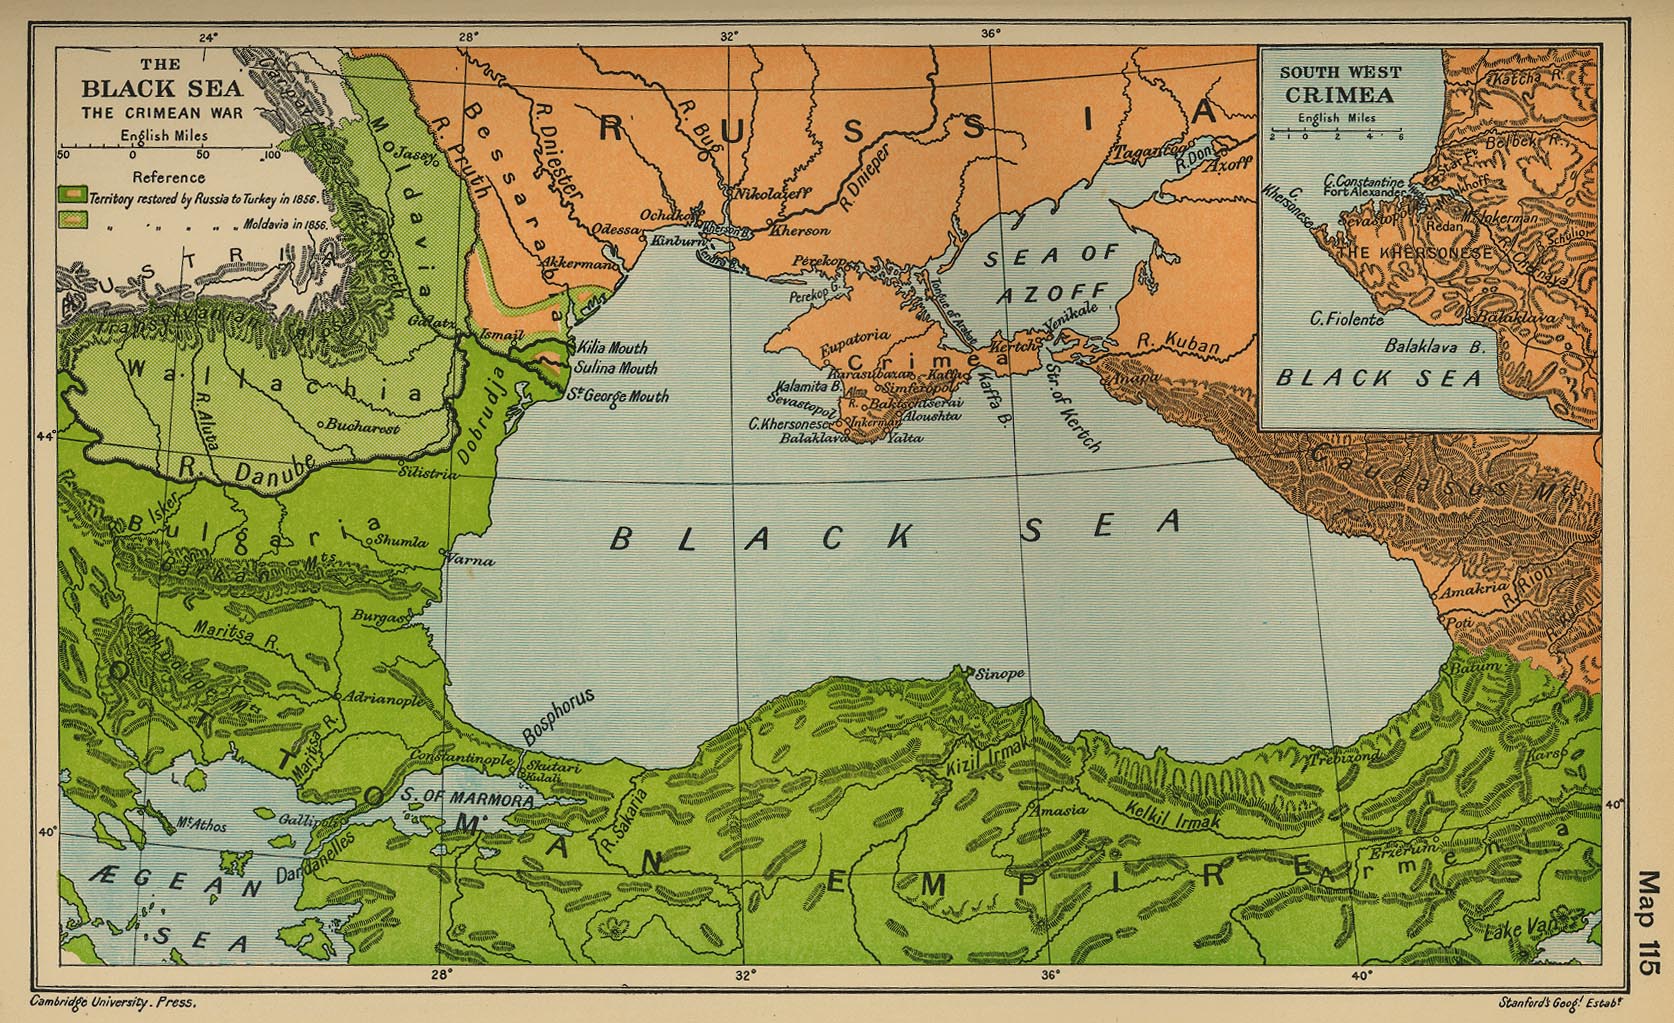 Map of The Black Sea: The Crimean War 1853-1856 - South West Crimea